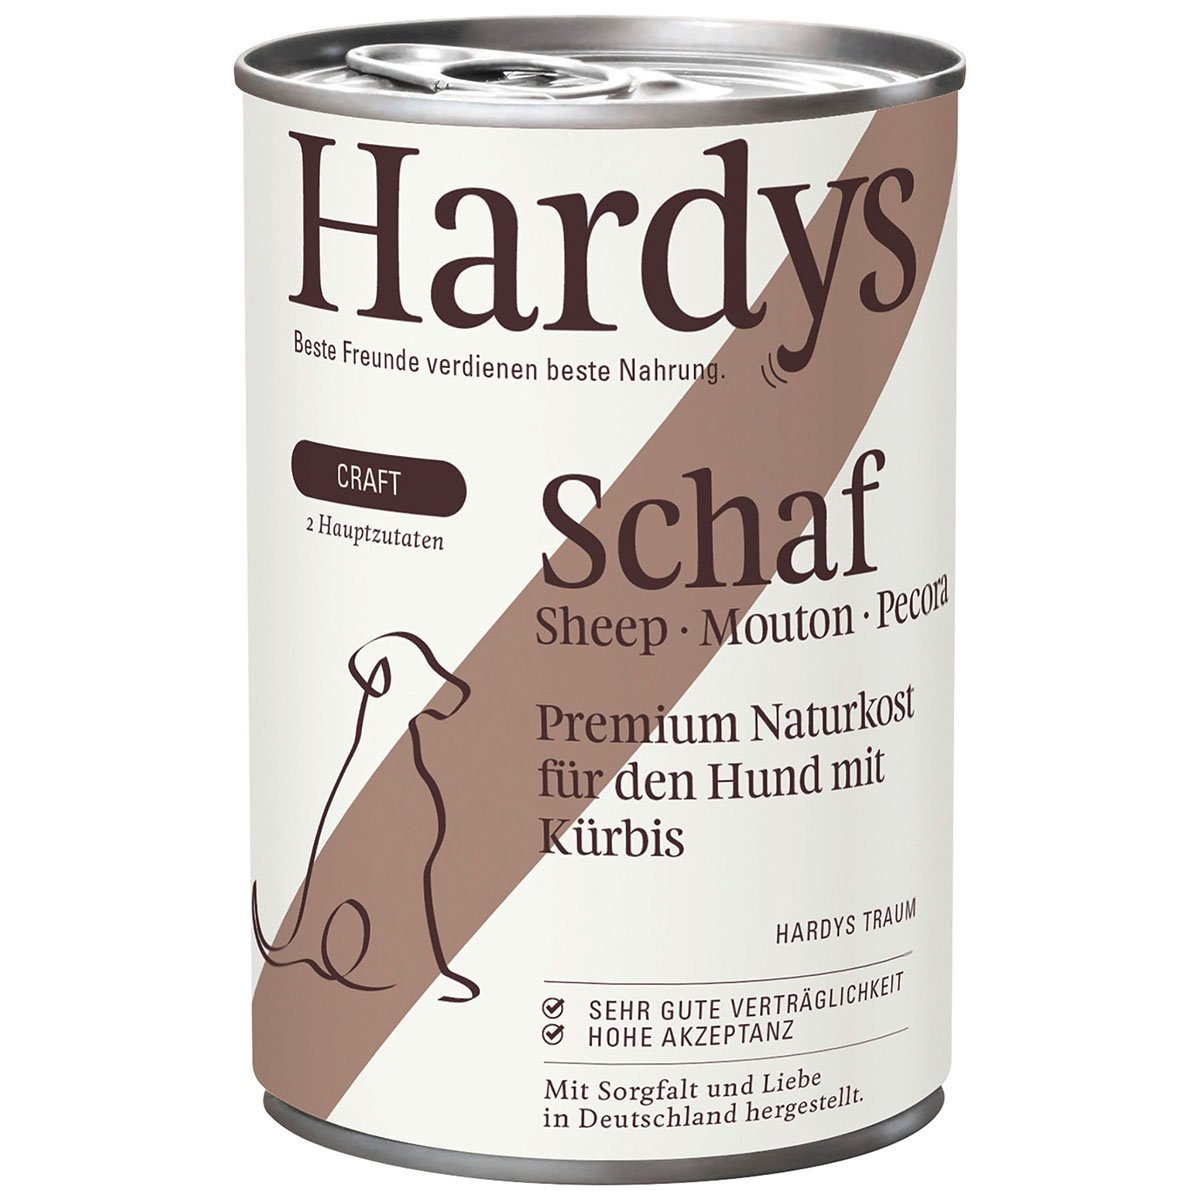 Hardys CRAFT Schaf & Kürbis 6x400g